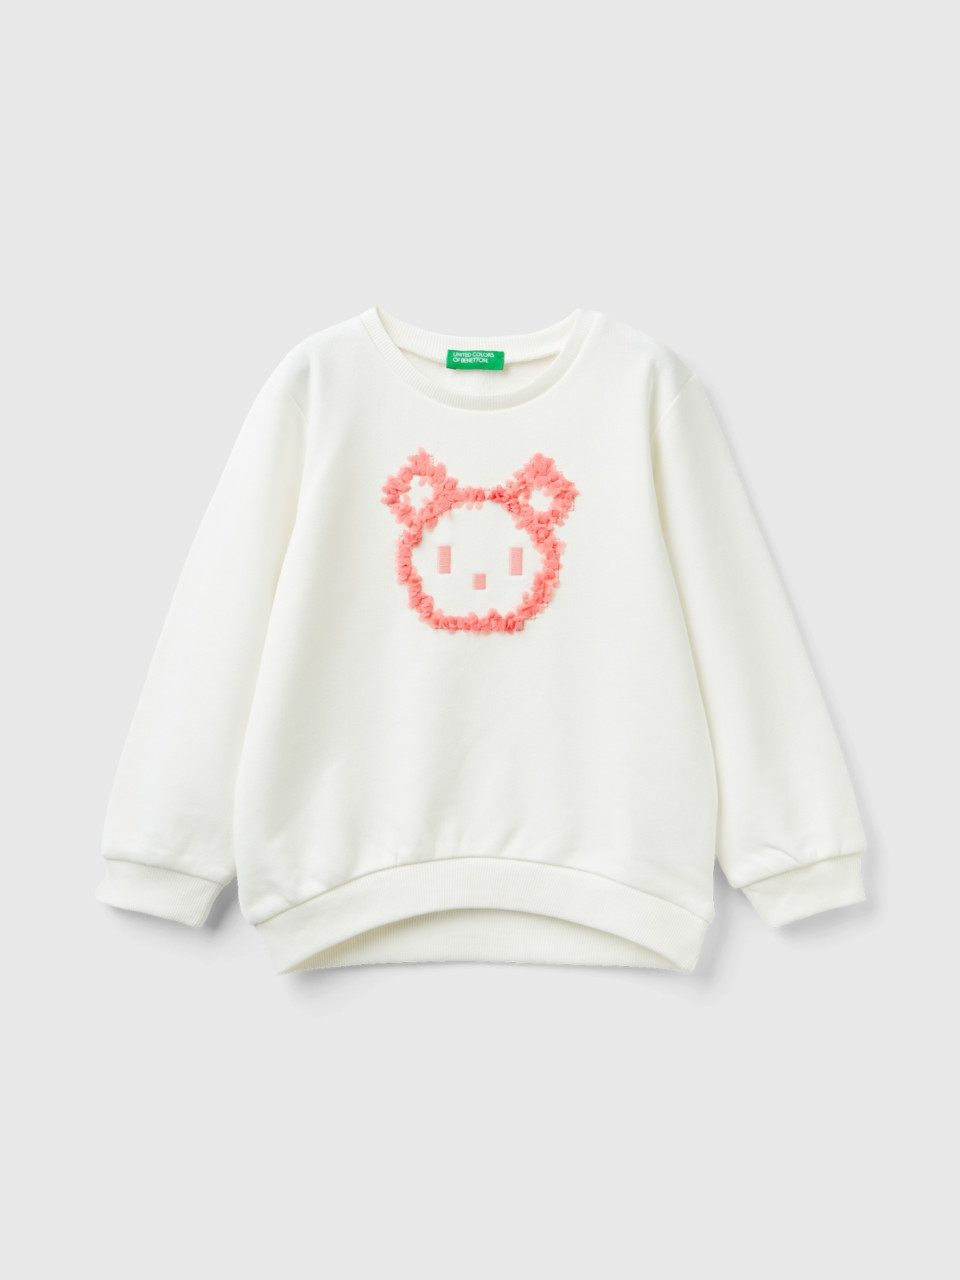 Benetton, Sweatshirt With Petal Applique, Creamy White, Kids